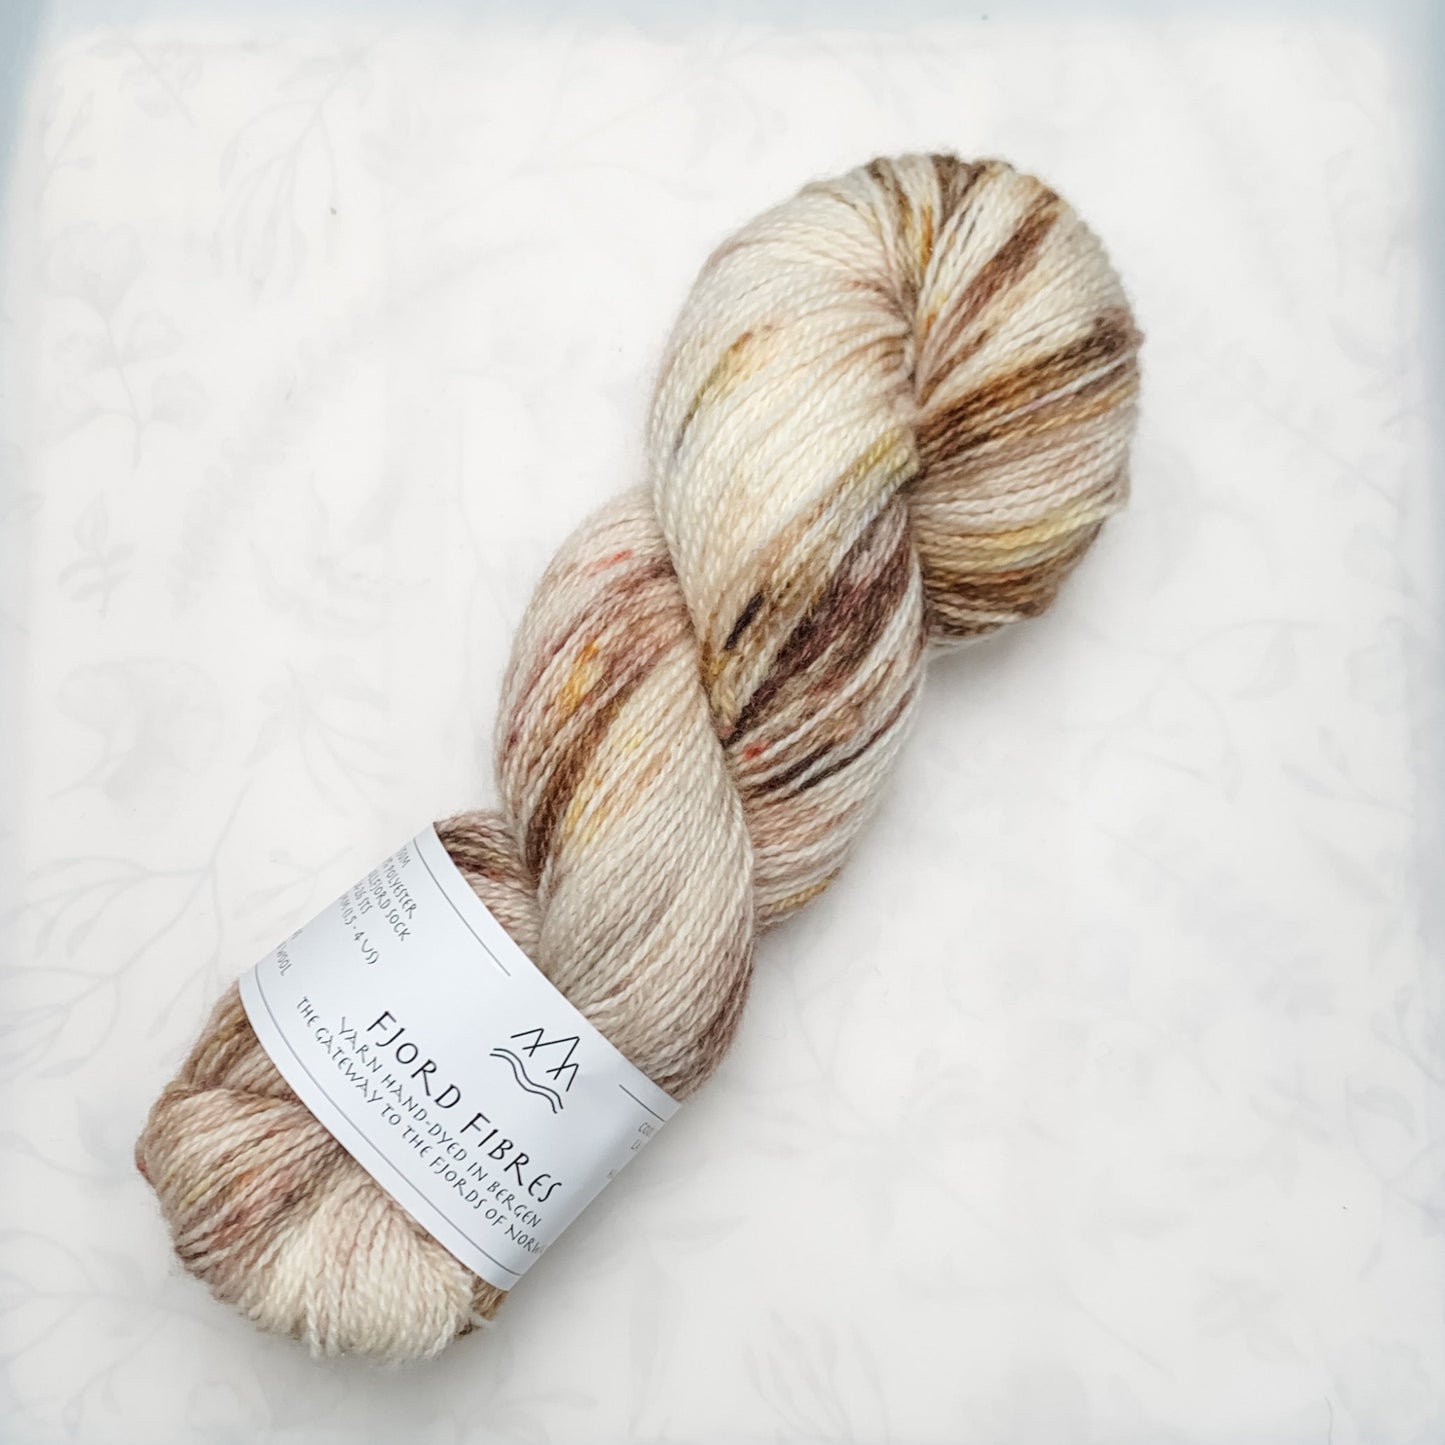 Krokan Is - Trollfjord sock - Hand Dyed Yarn - Variegated Yarn